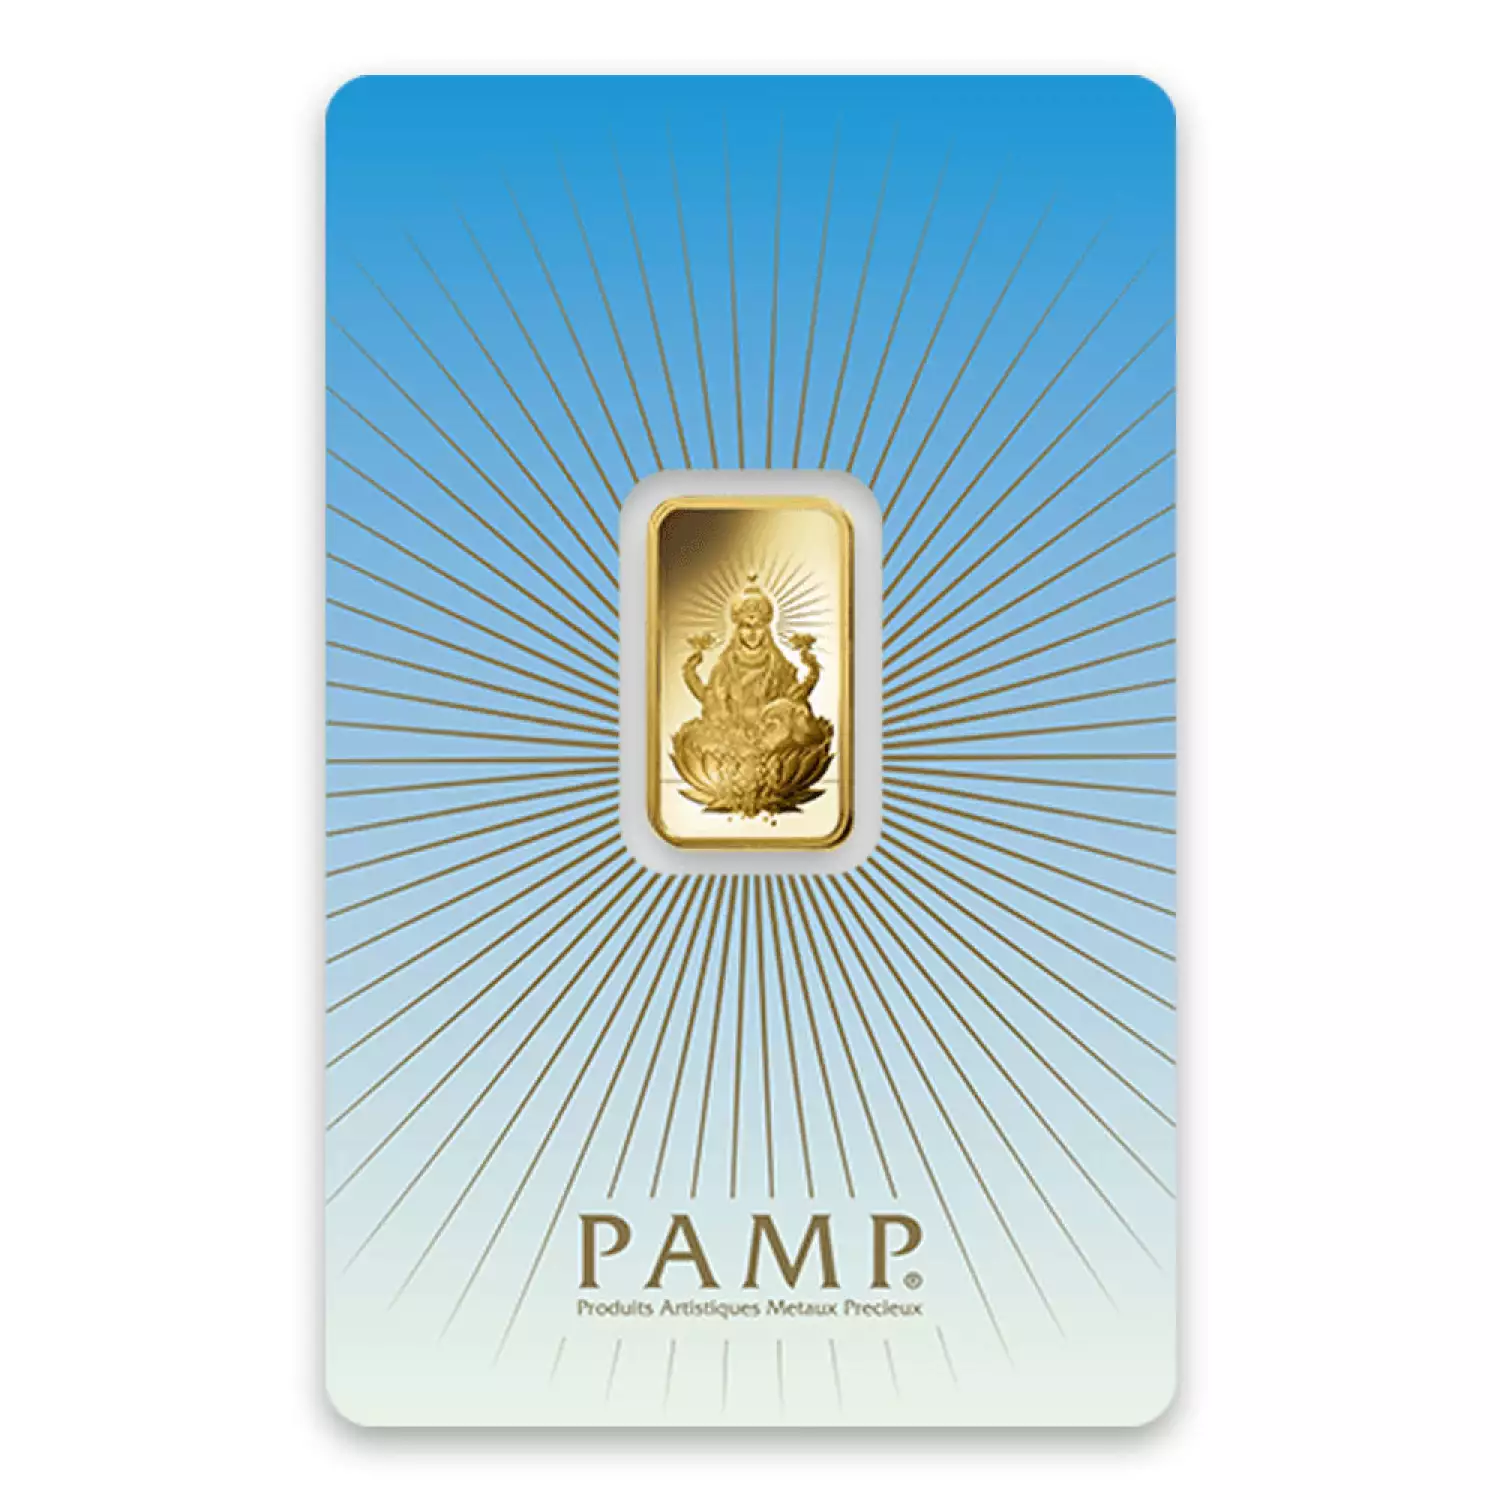 5g PAMP Gold Bar - Lakshmi (3)